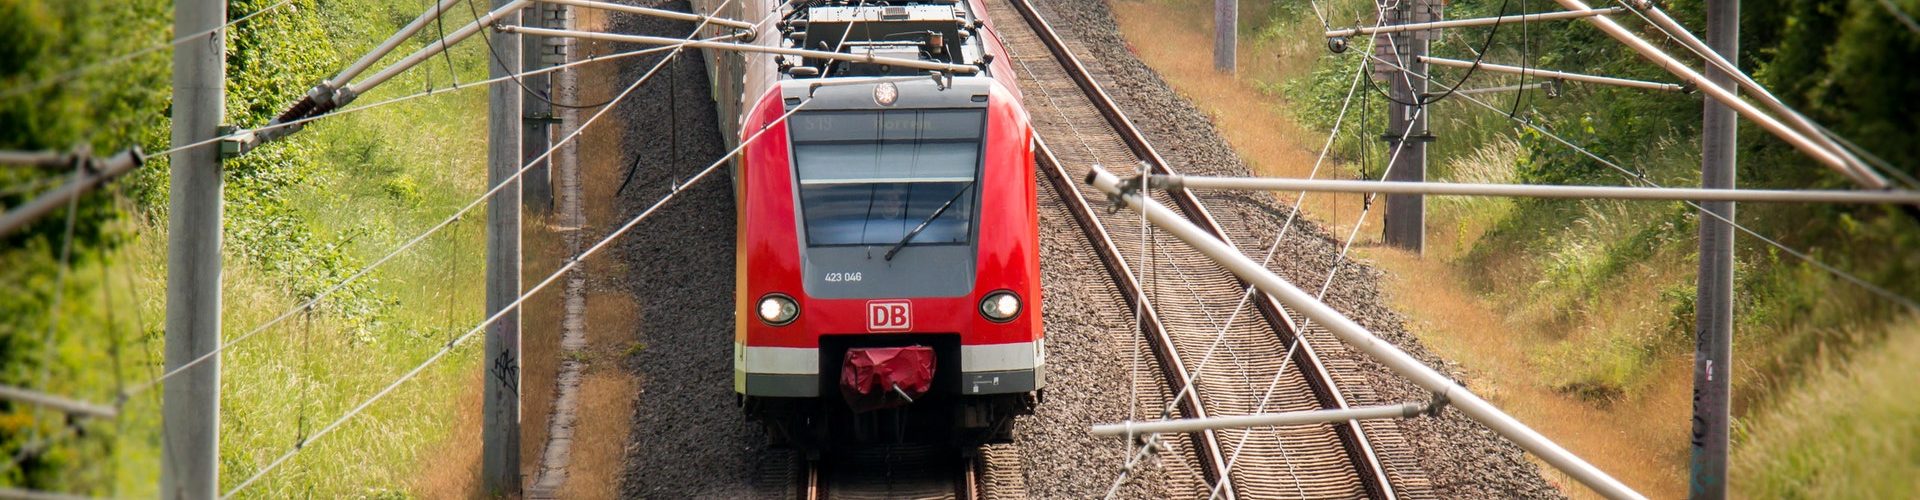 catenary-deutsche-bahn-electric-train-35881